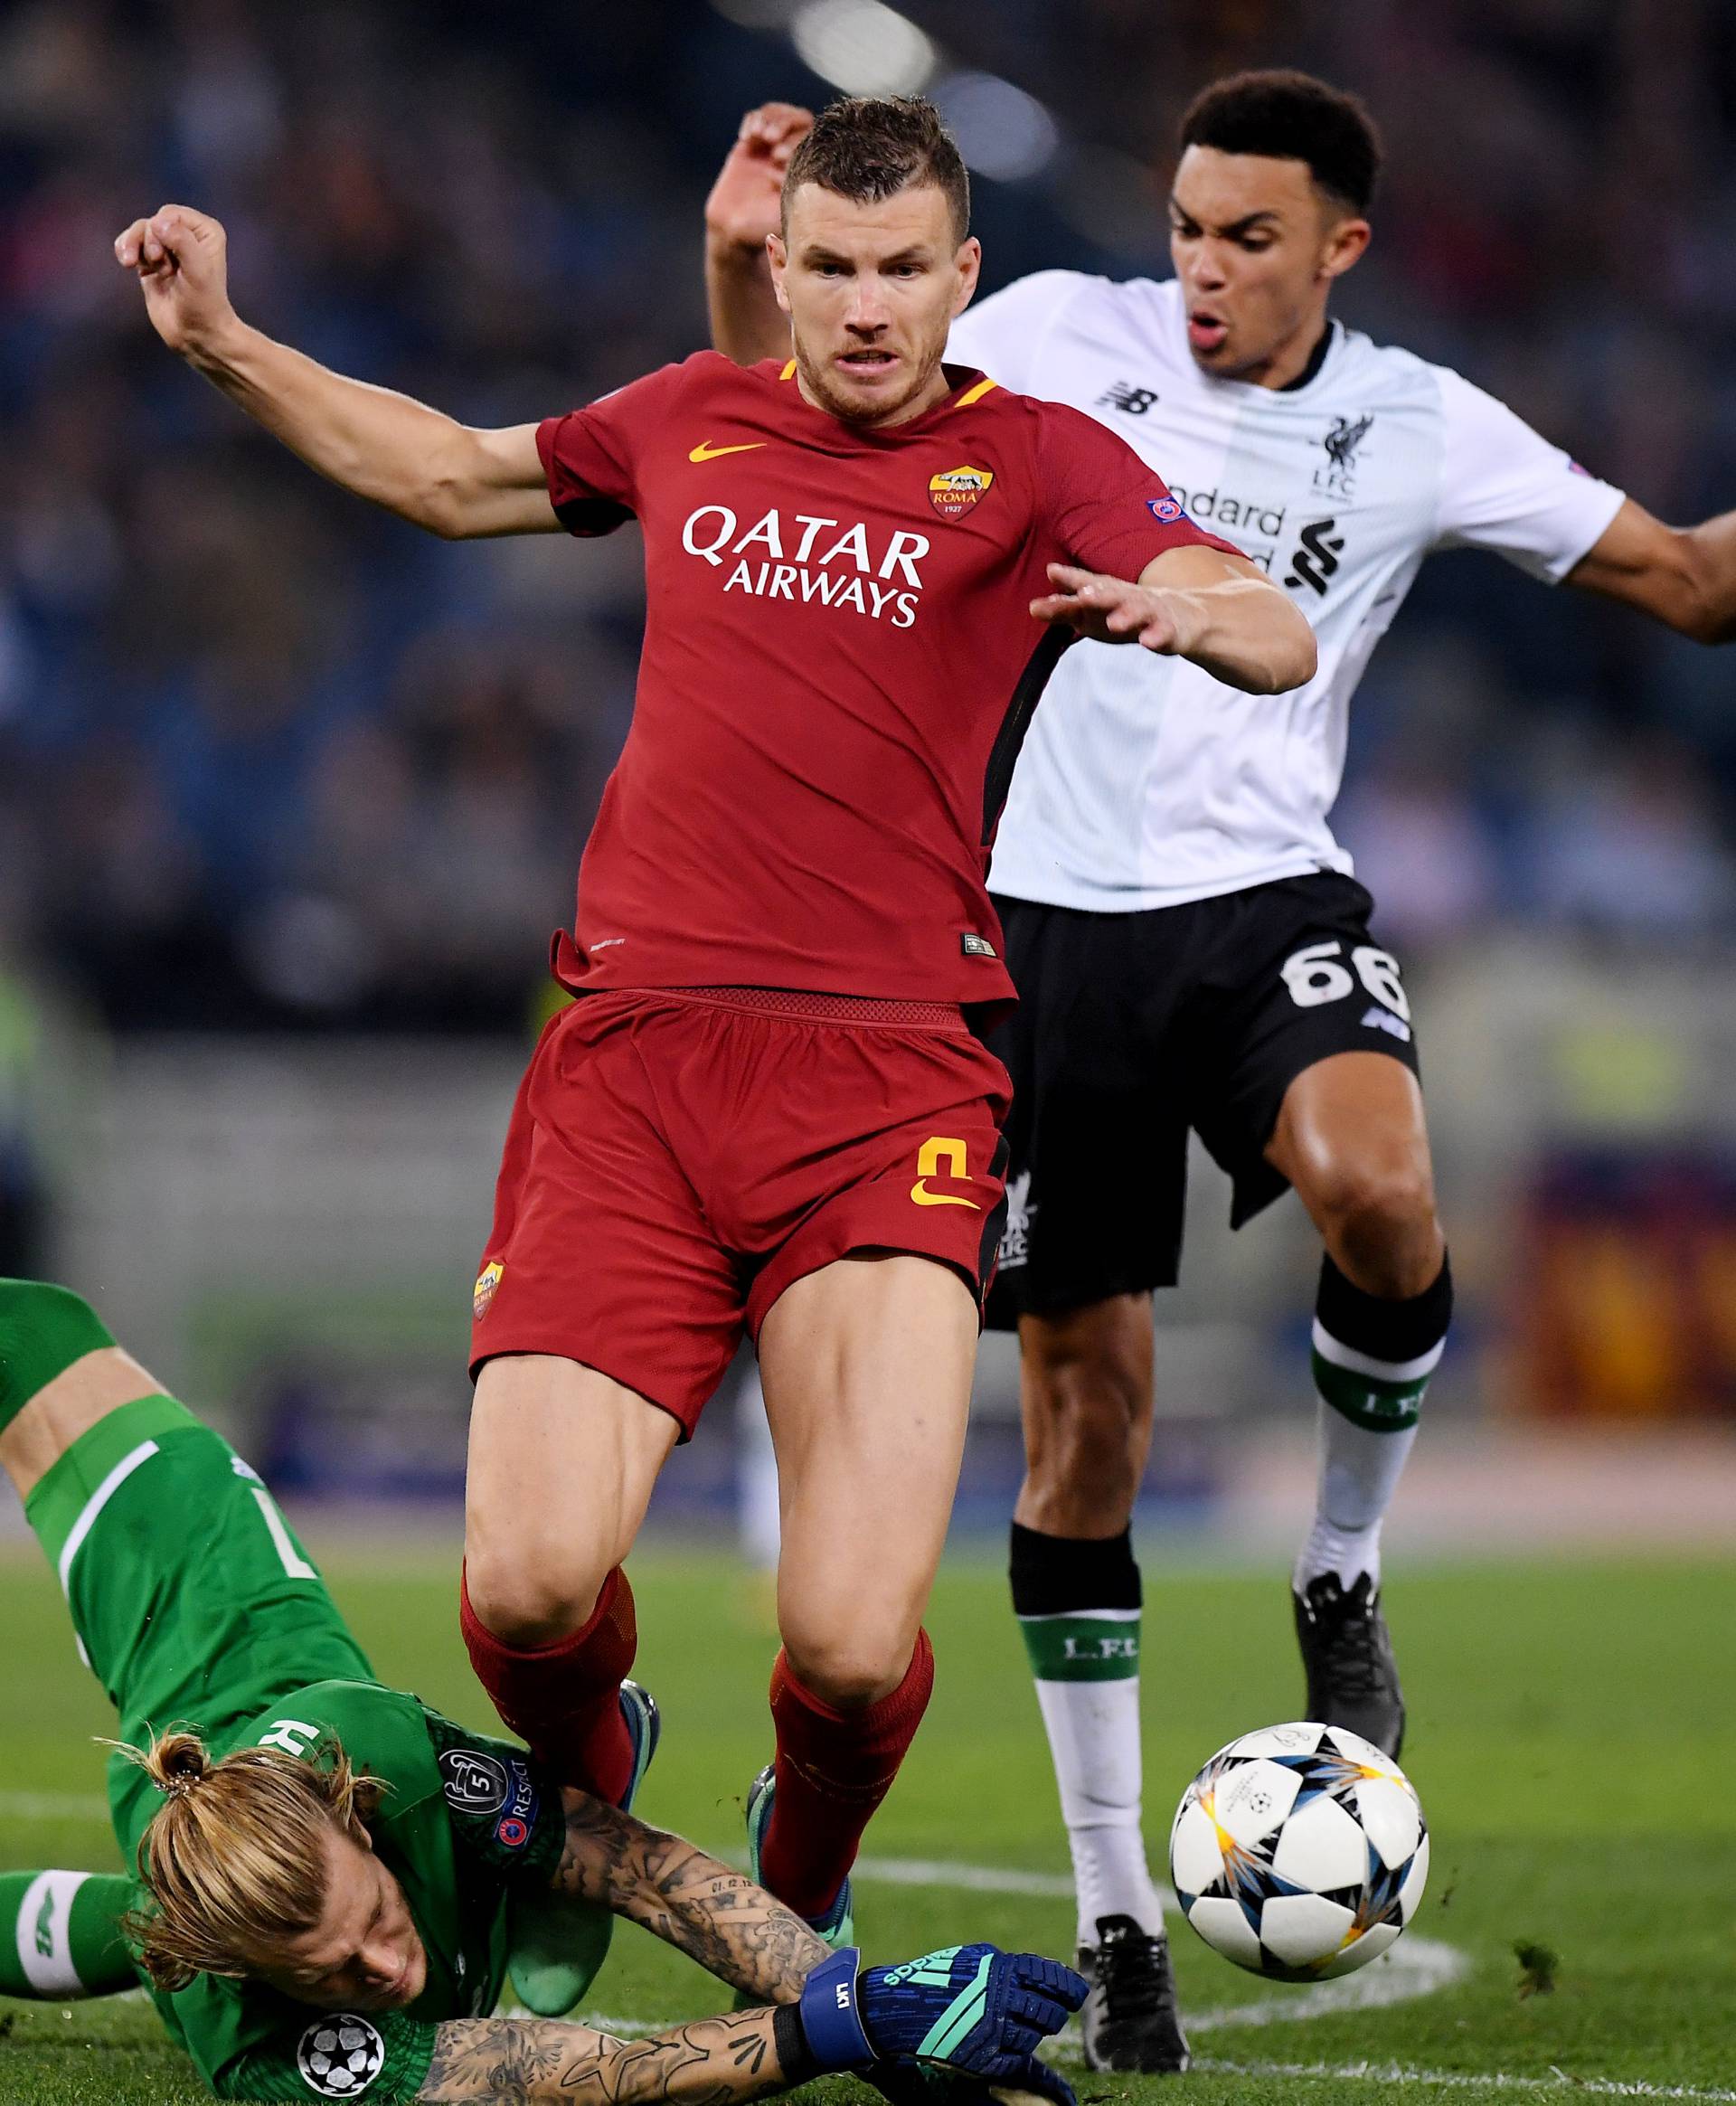 Champions League Semi Final Second Leg - AS Roma v Liverpool